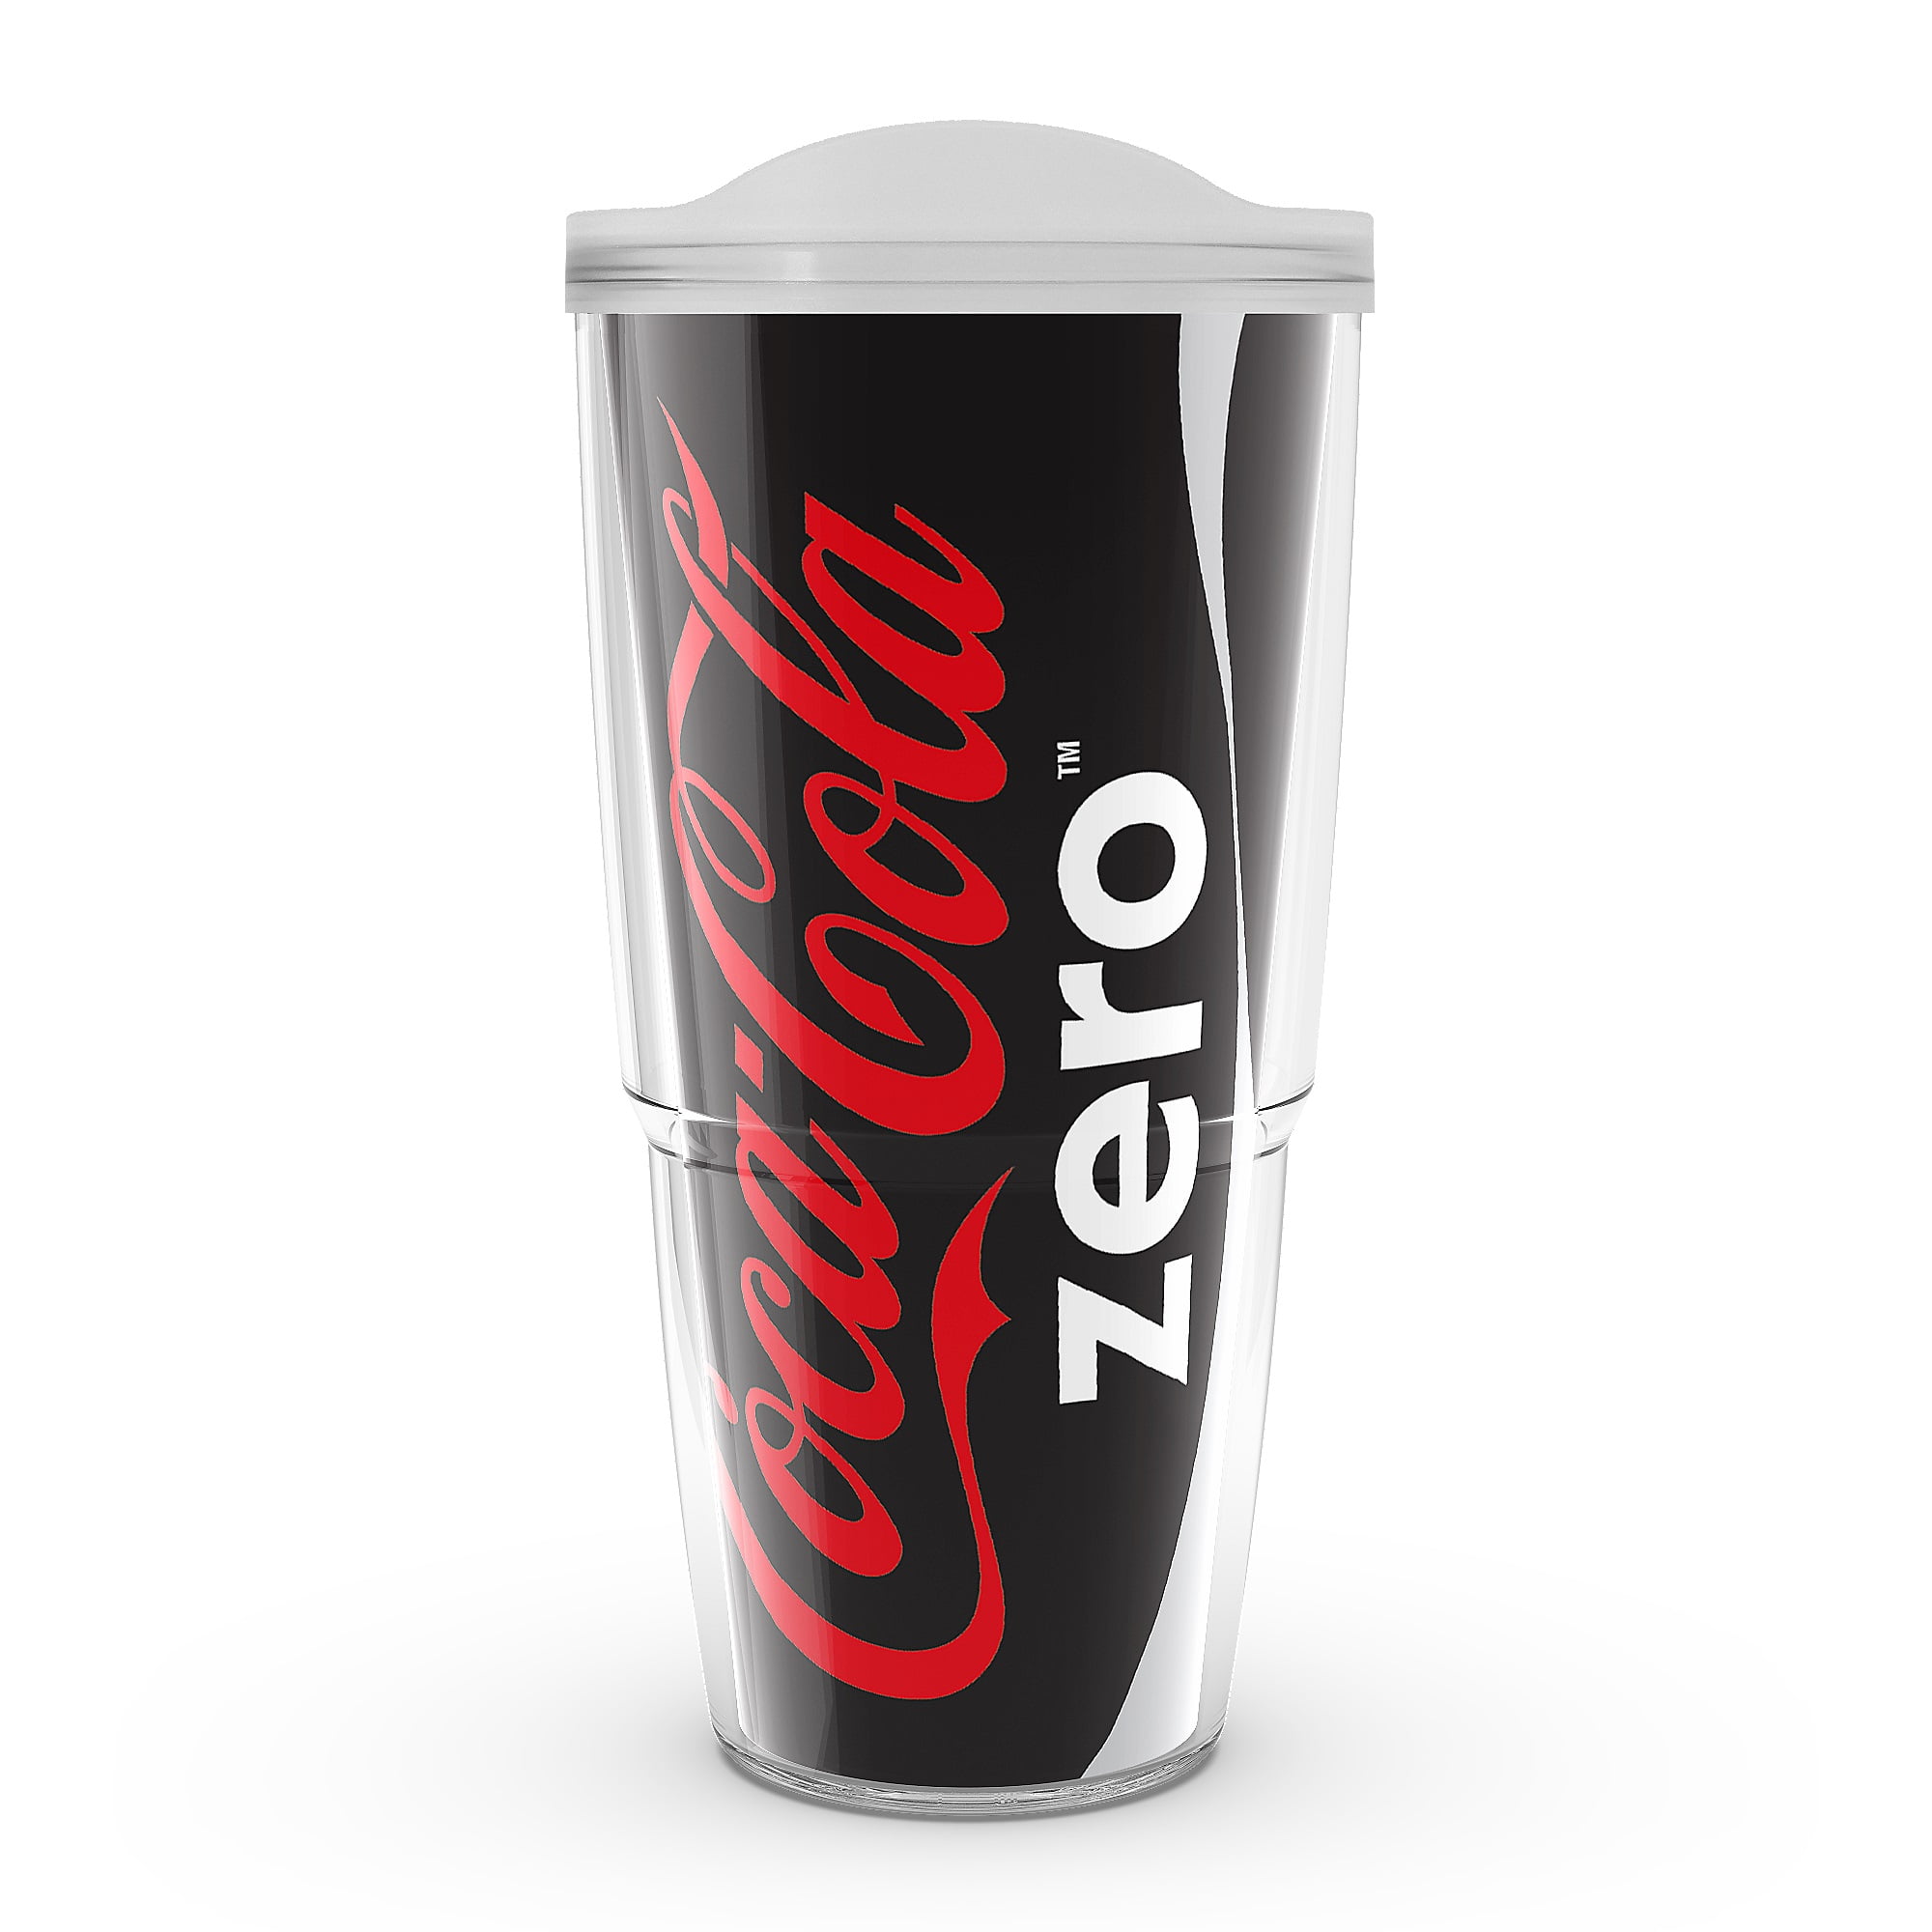 Coca Cola Coca Cola Tervis Tumbler & Lid 16oz Keeps drinks hot & cold Rare Bottle Design 